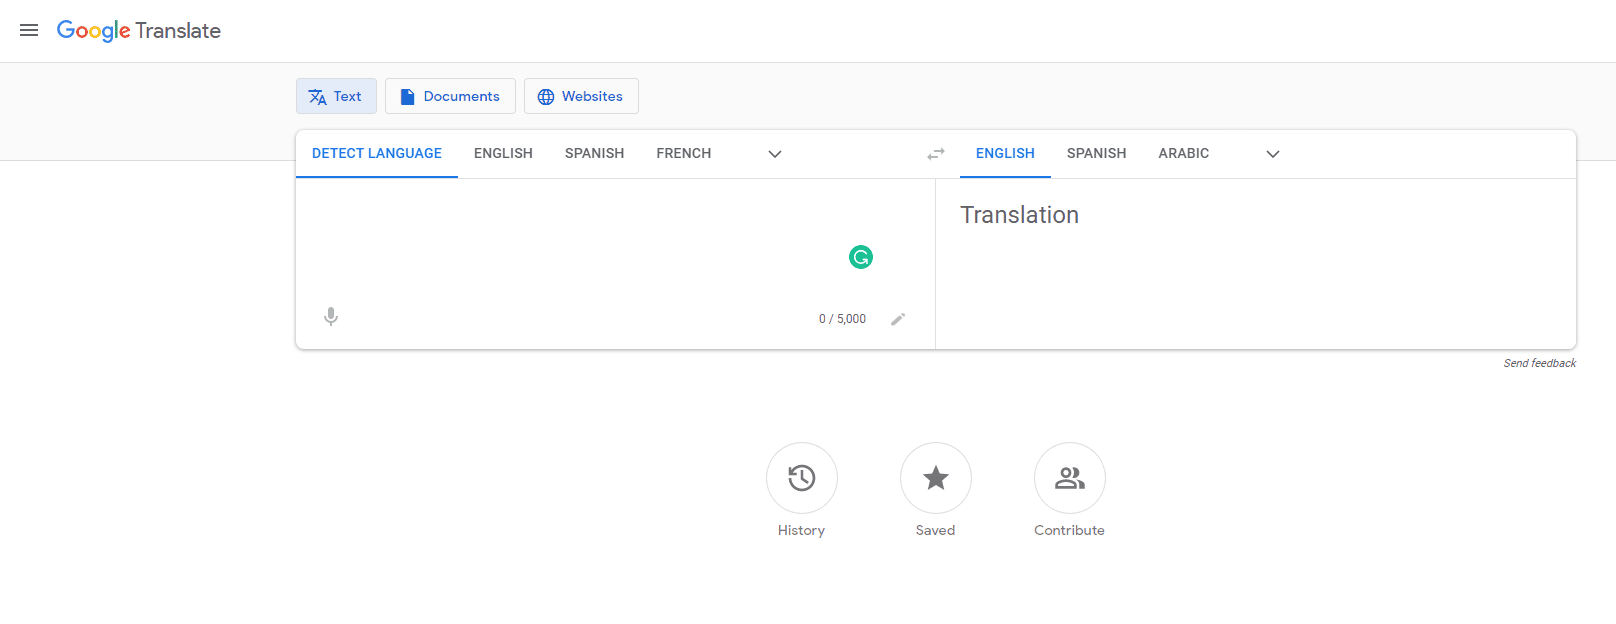 About Google Translate